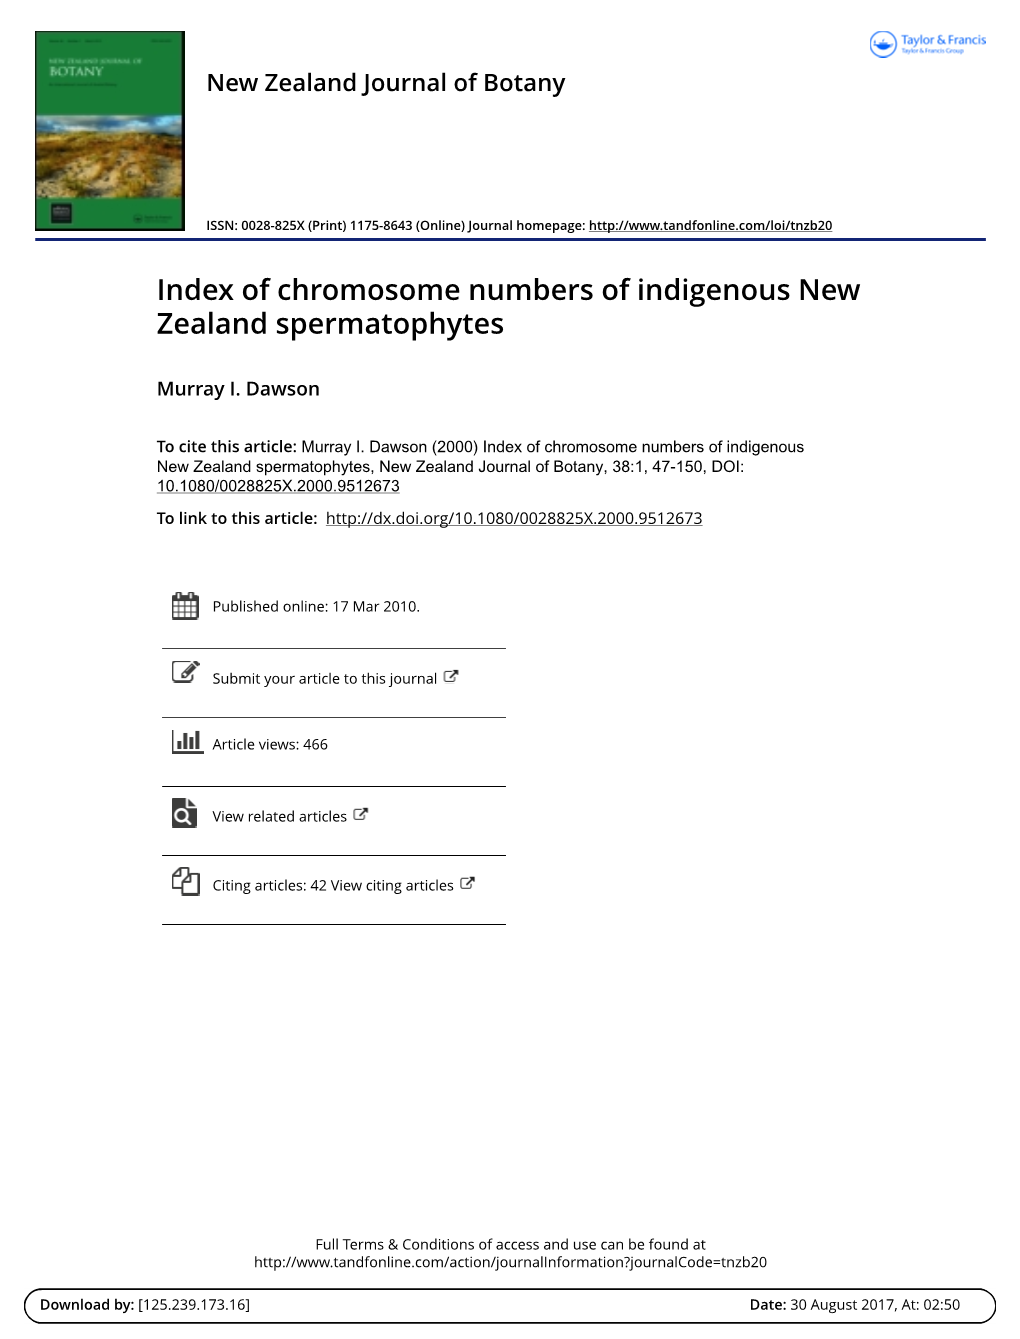 Index of Chromosome Numbers of Indigenous New Zealand Spermatophytes